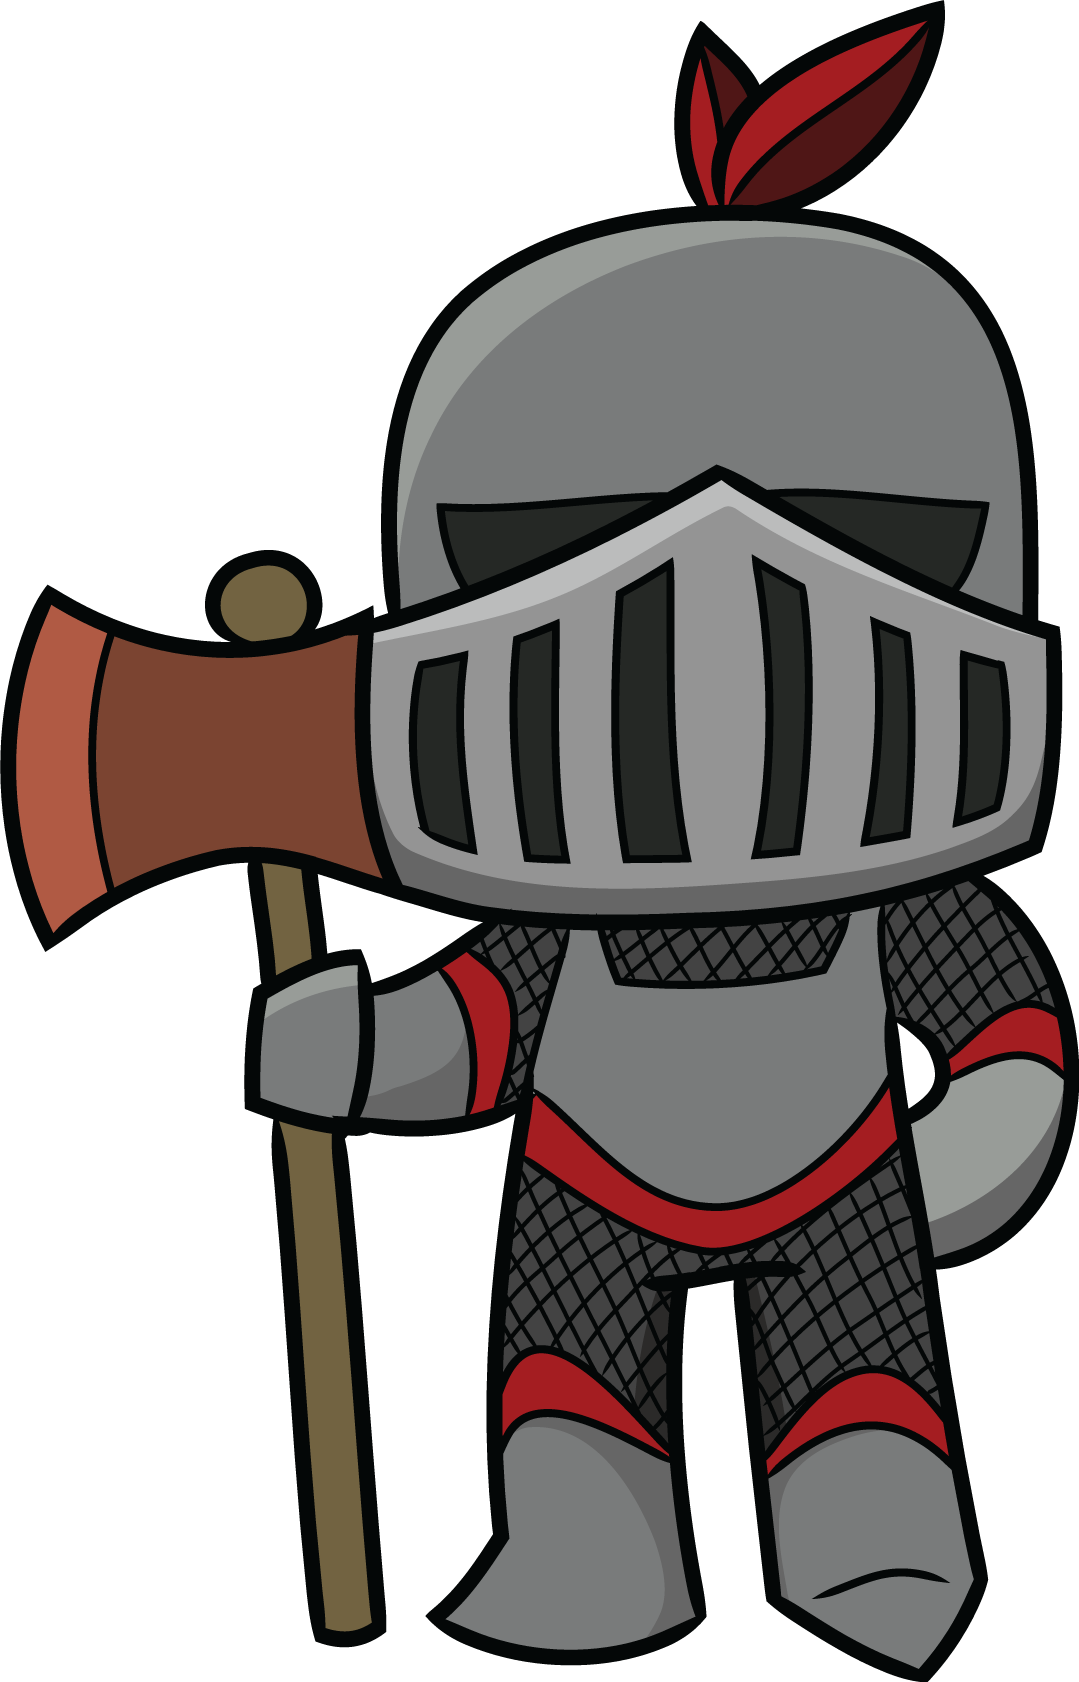 Cartoon Of A Knight With An Axe